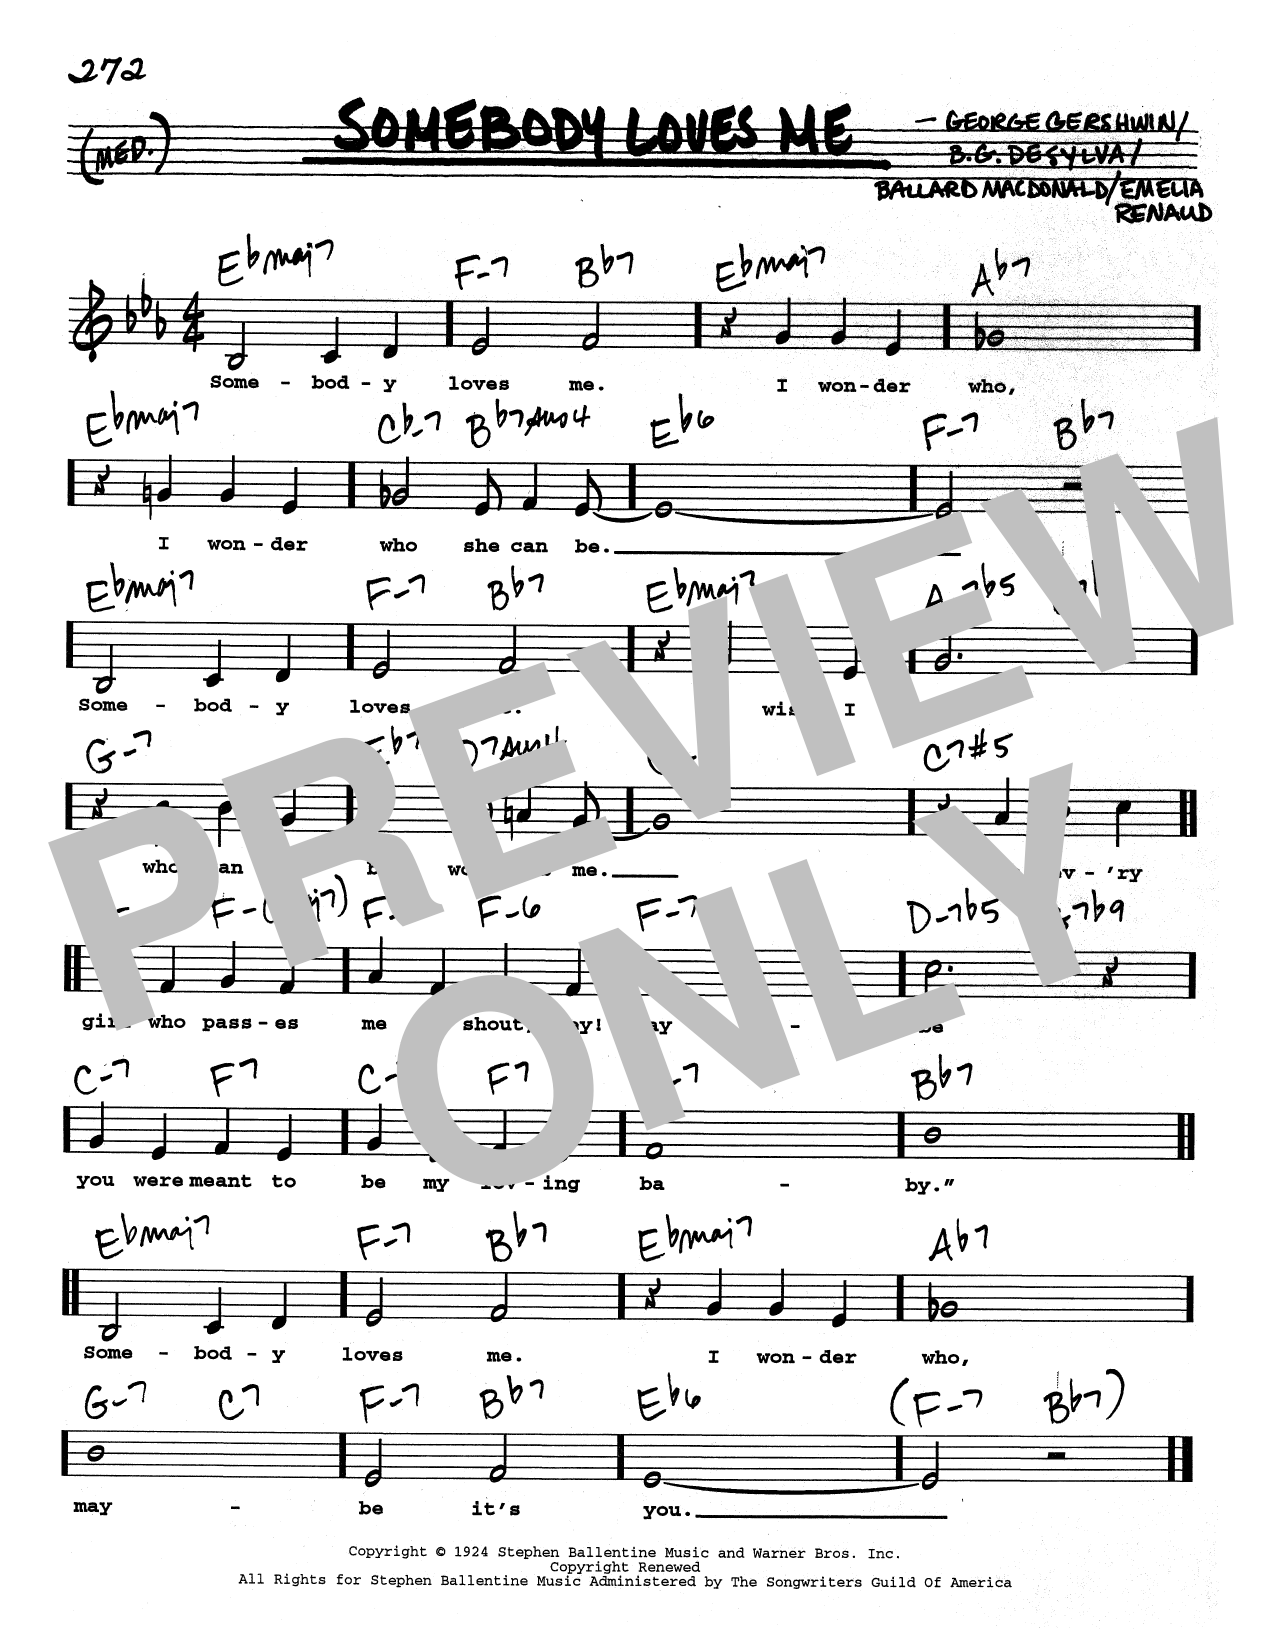 George Gershwin Somebody Loves Me (Low Voice) sheet music notes printable PDF score